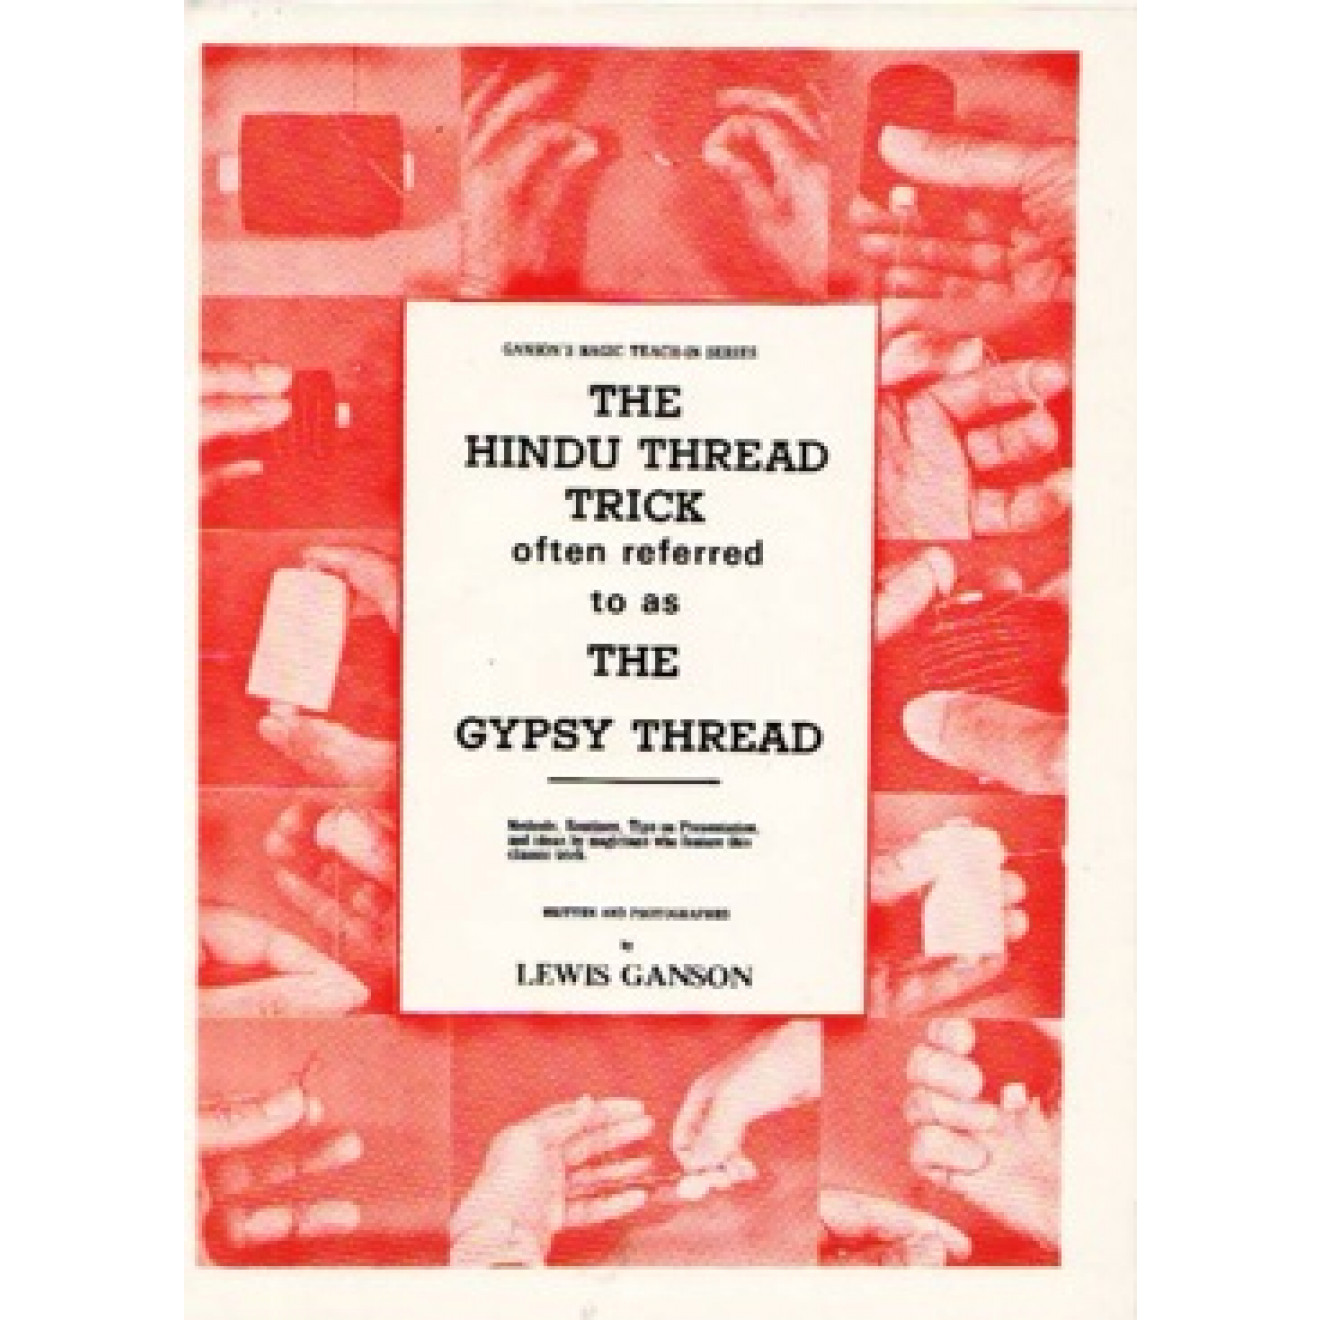 The Hindu Thread Trick